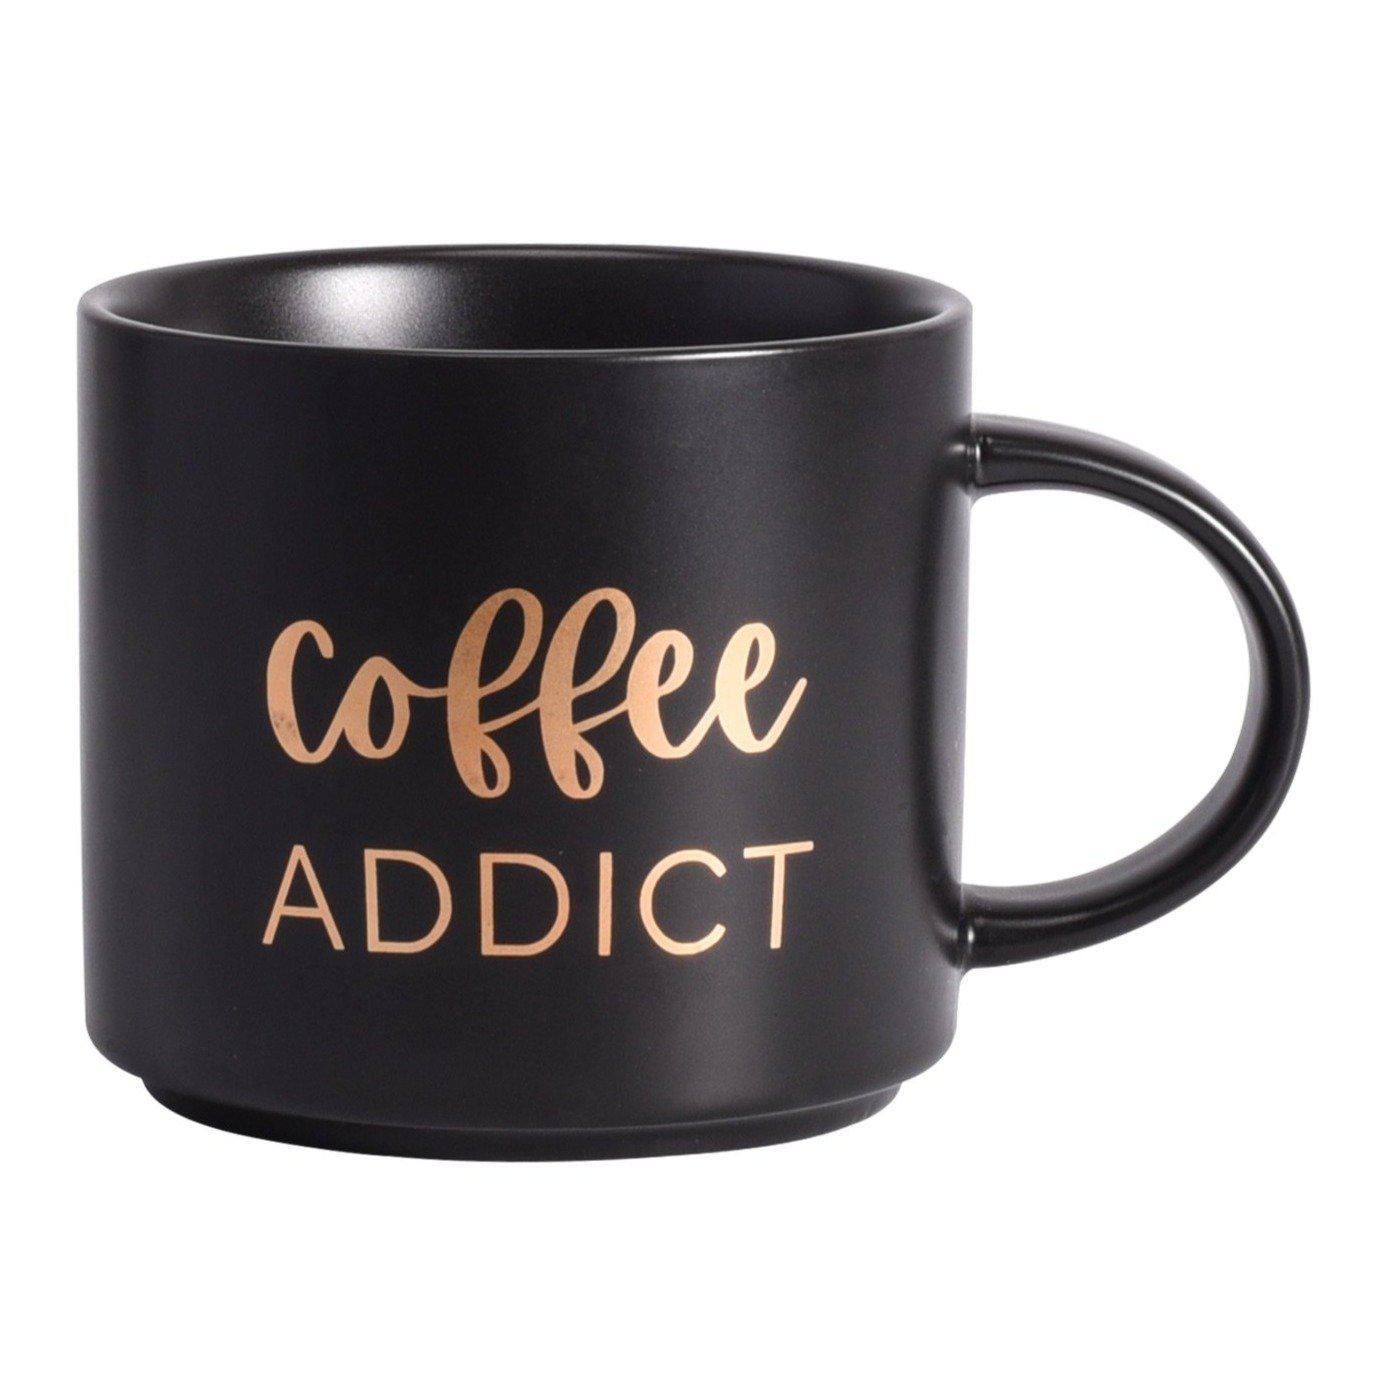 Coffee Addict" mug black